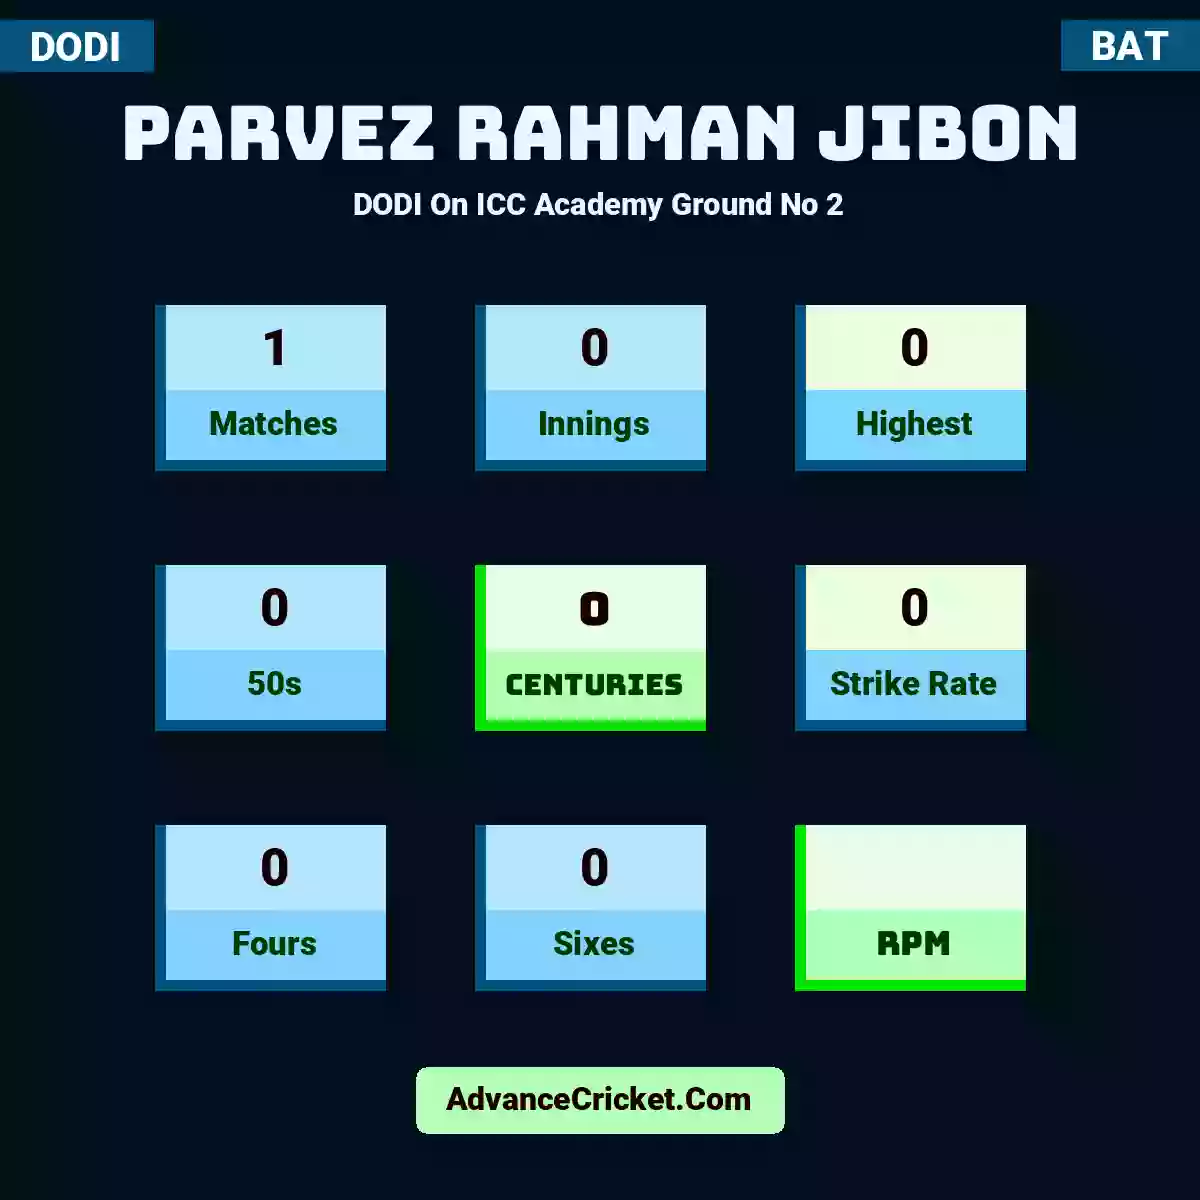 Parvez Rahman Jibon DODI  On ICC Academy Ground No 2, Parvez Rahman Jibon played 1 matches, scored 0 runs as highest, 0 half-centuries, and 0 centuries, with a strike rate of 0. P.Rahman.Jibon hit 0 fours and 0 sixes.